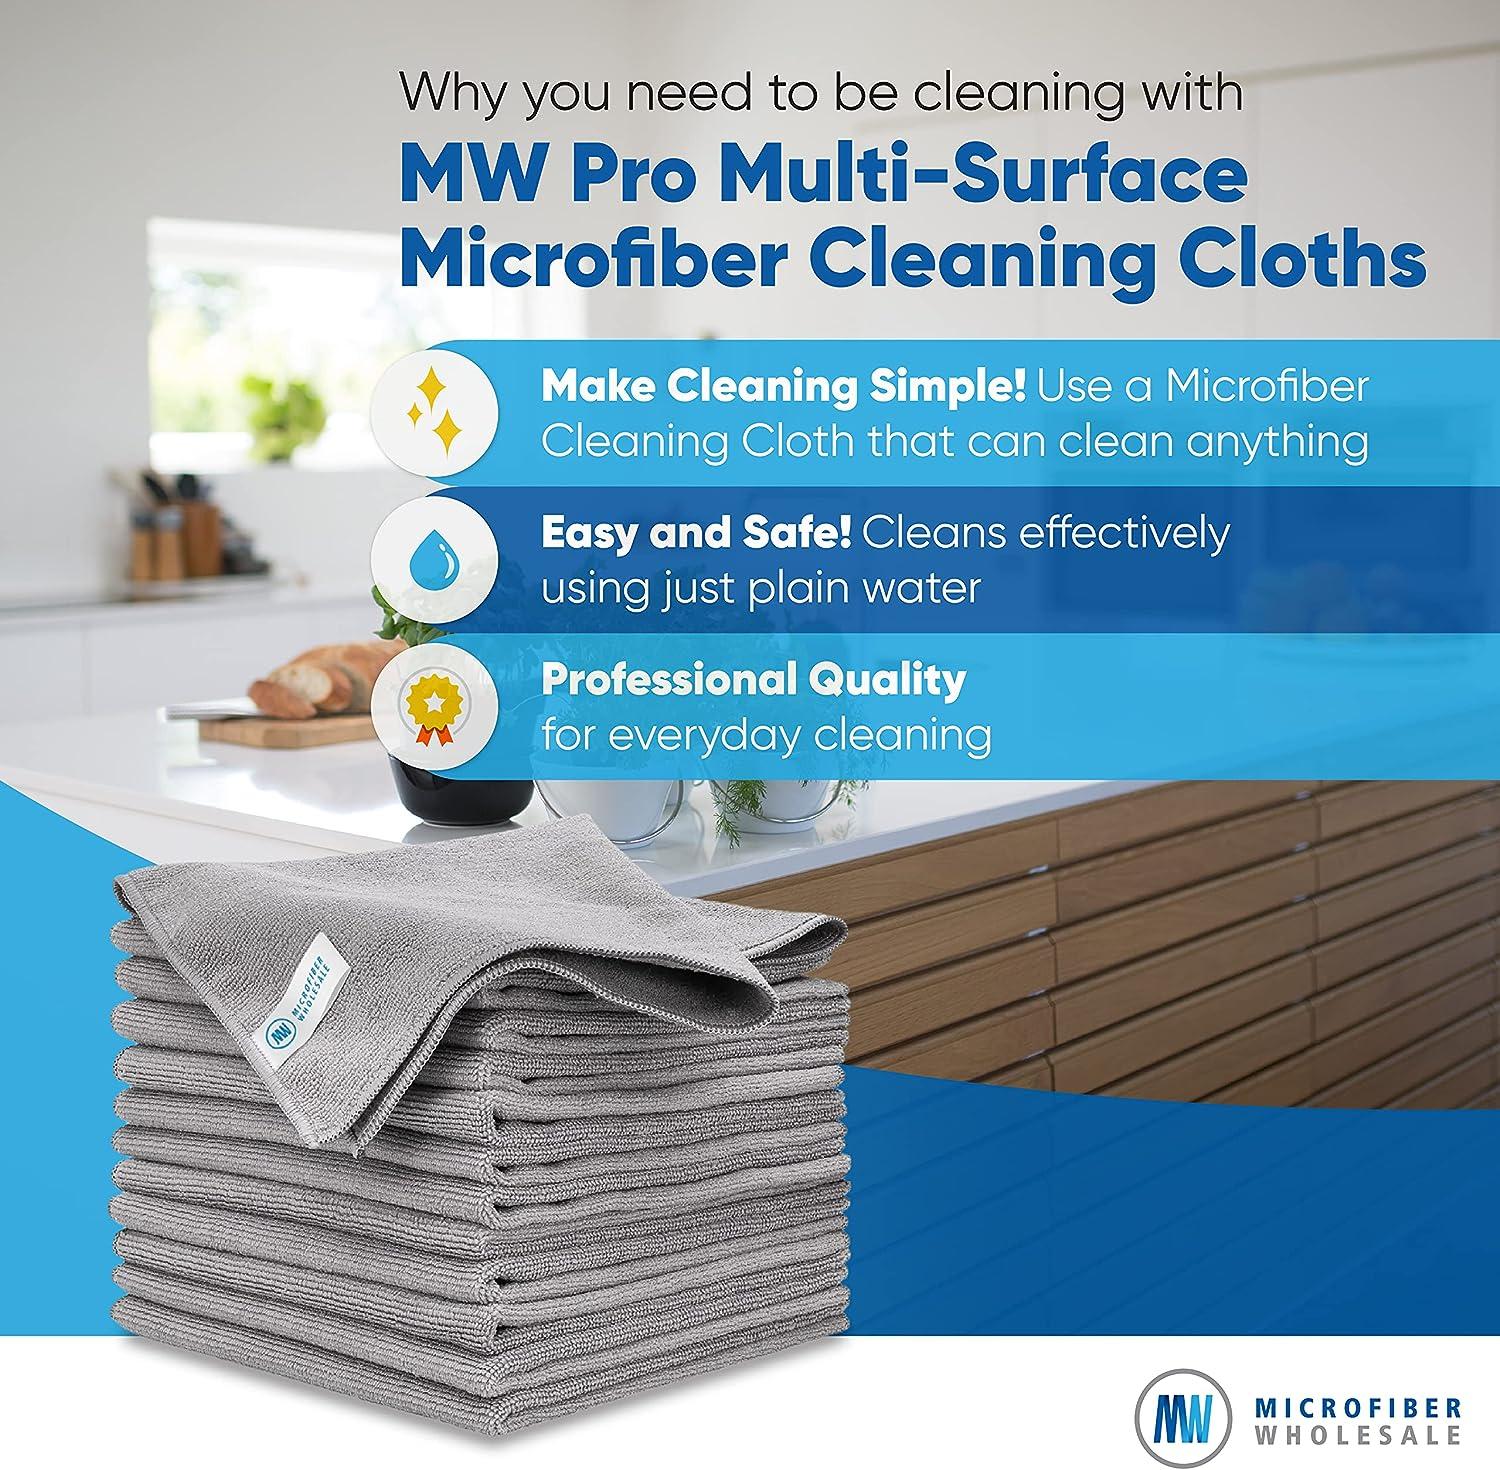 Plain Microfiber Cleaning Cloth Towel No-scratch Car Polishing